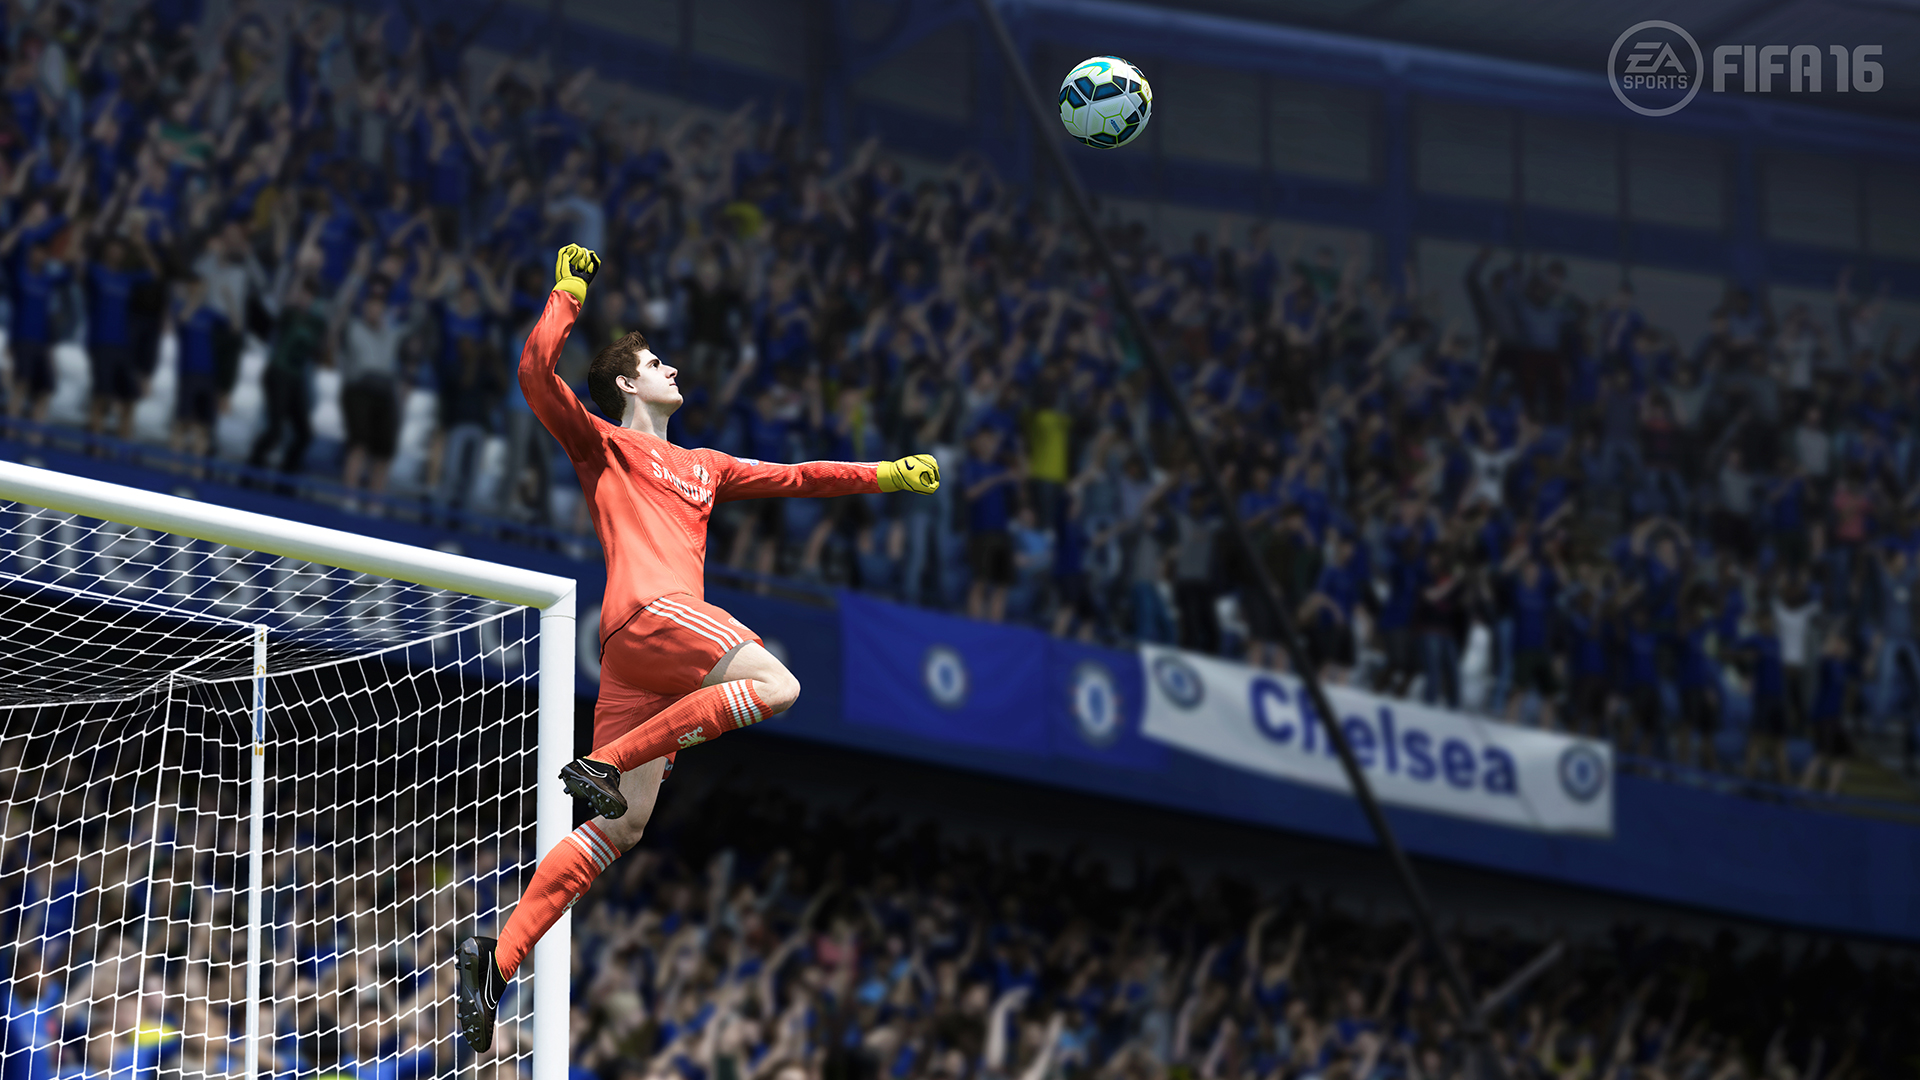 FIFA 16 screenshot 3580